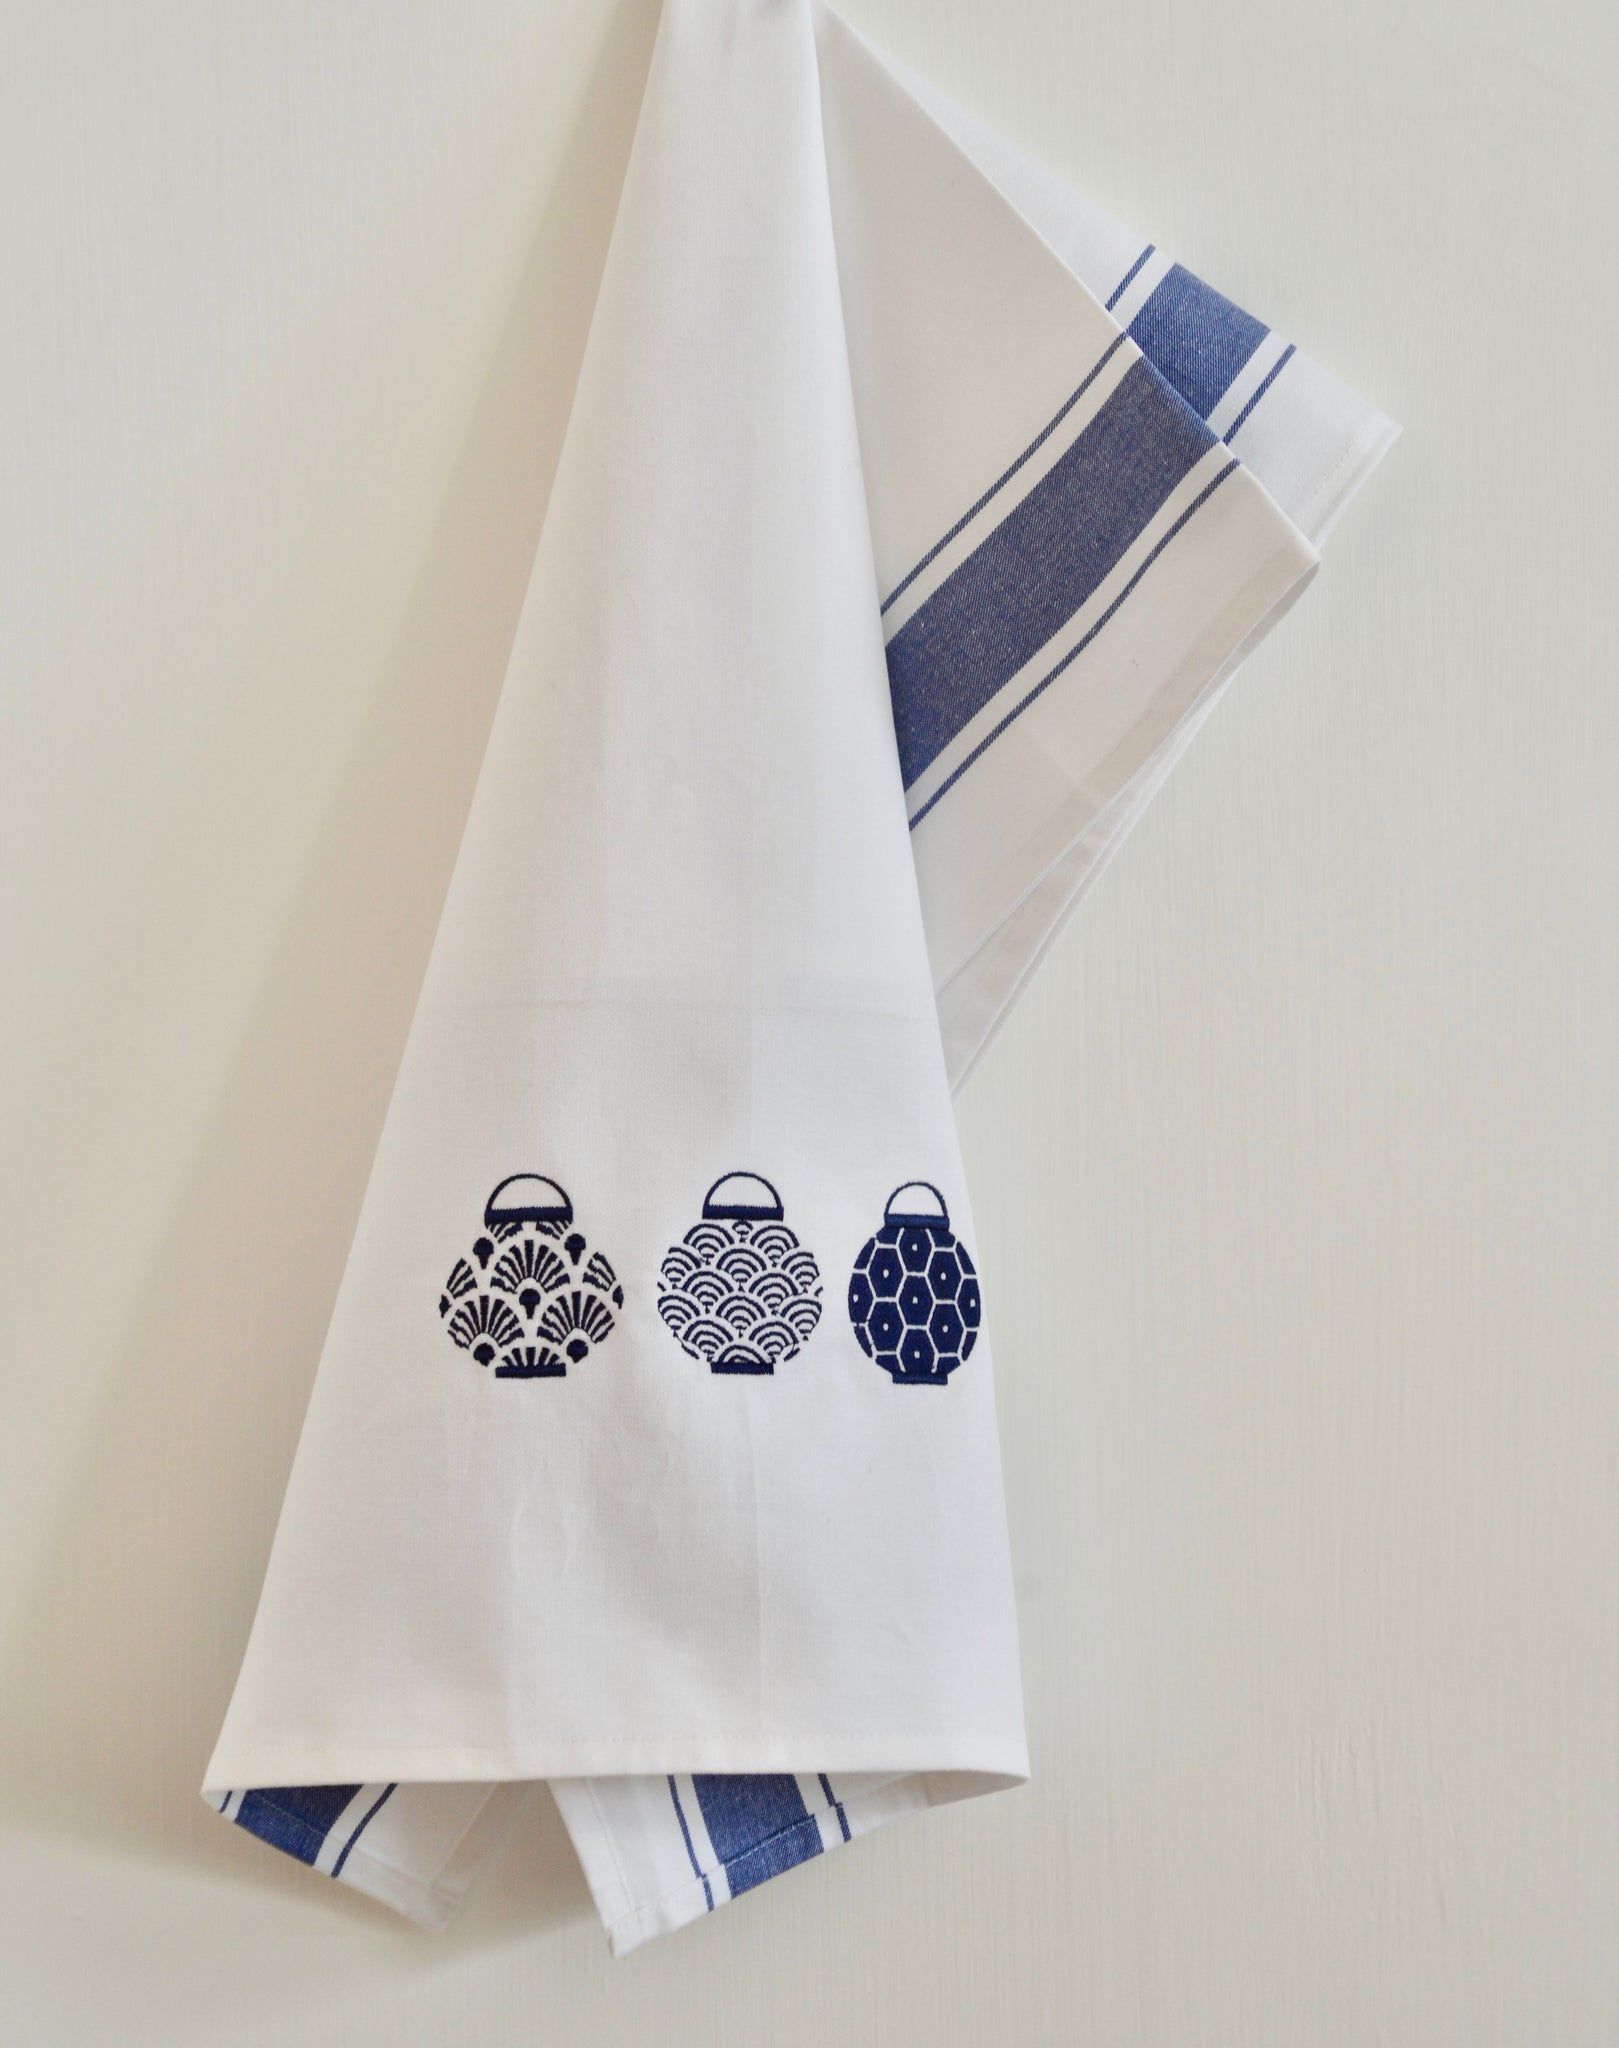 Tea towel with Blue Trio Set of Lanterns